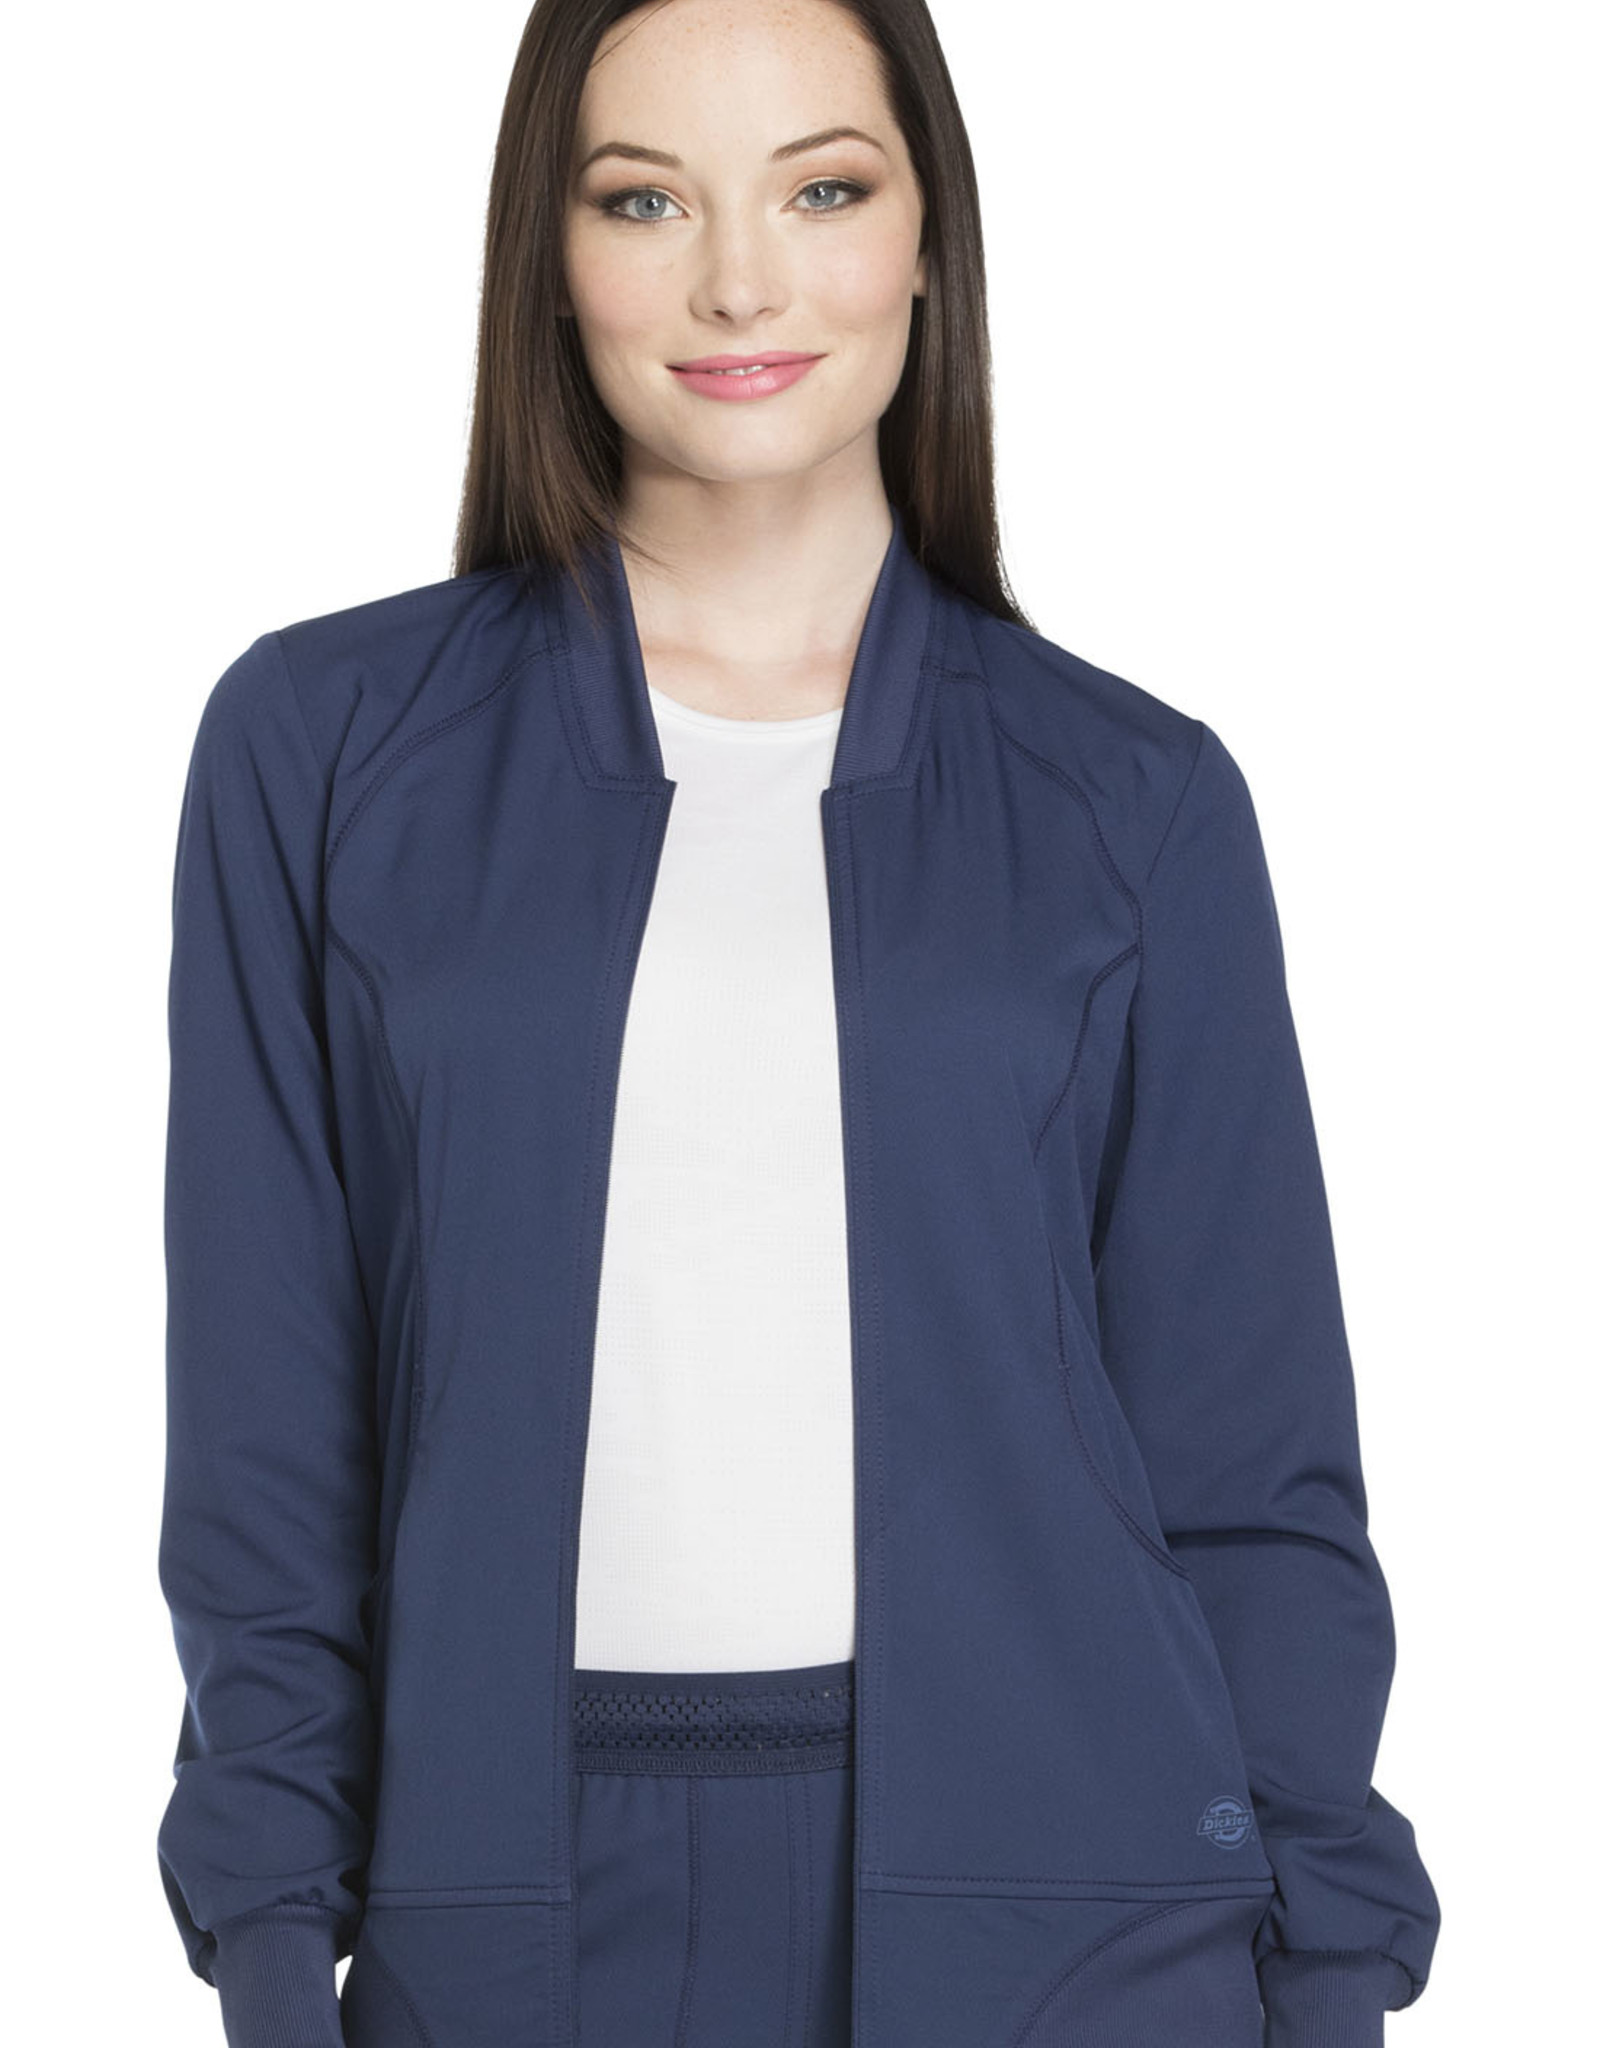 Dickies Dynamix Women's Zip Front Warm-Up Jacket (Plus Size)